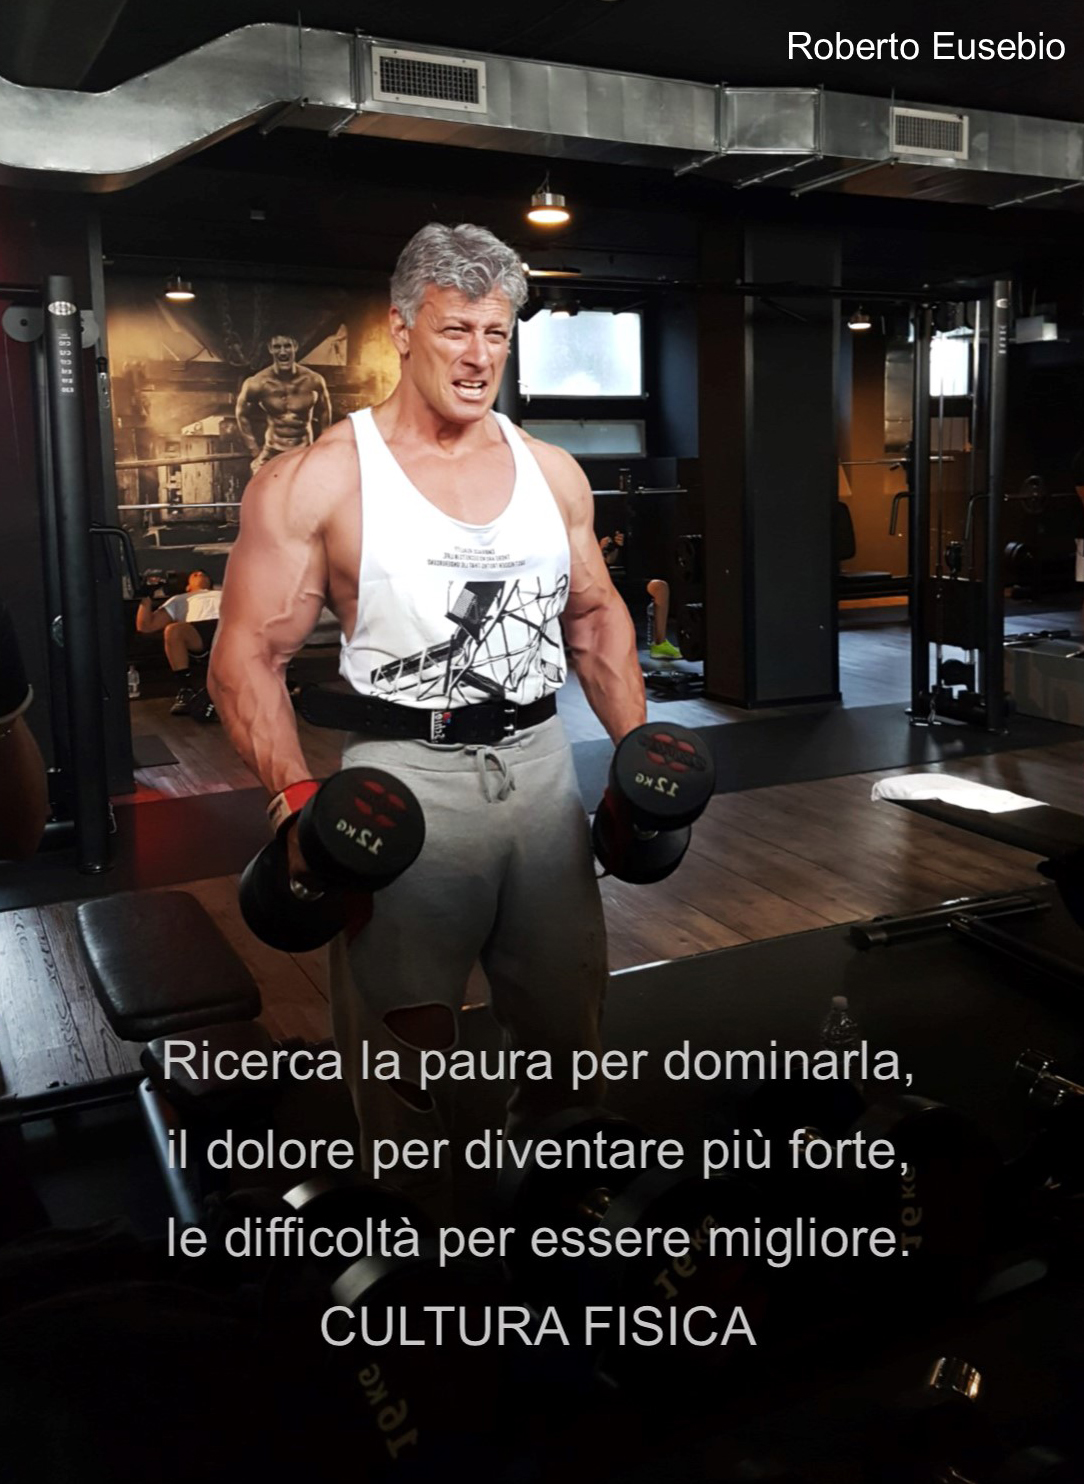 Personal trainer Milano